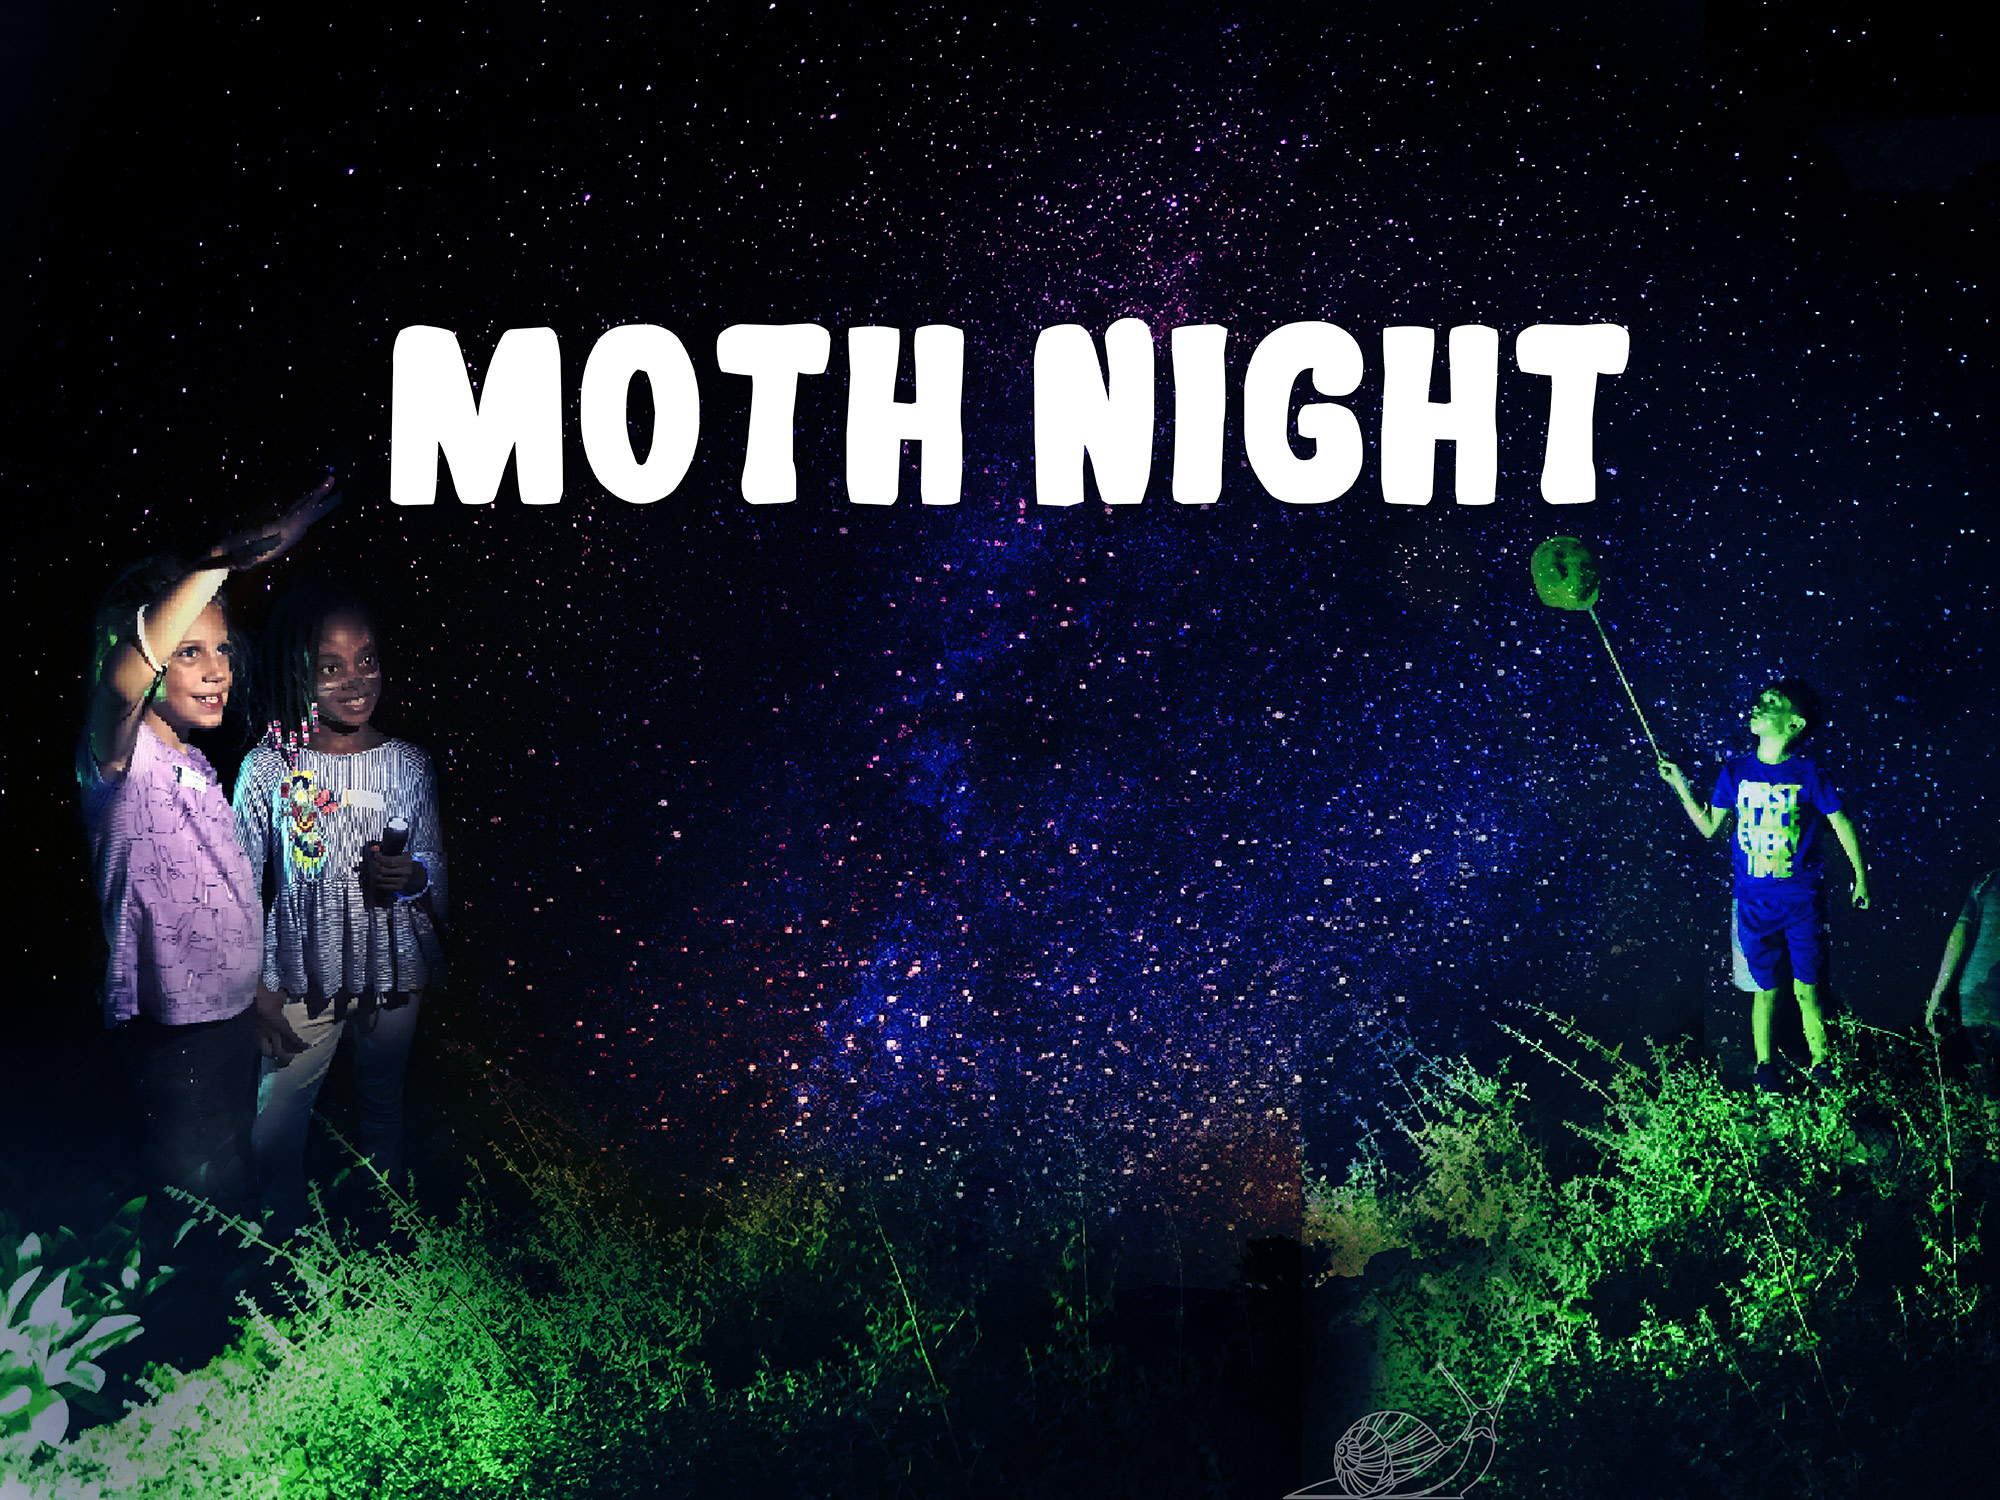 Moth Night Graphic